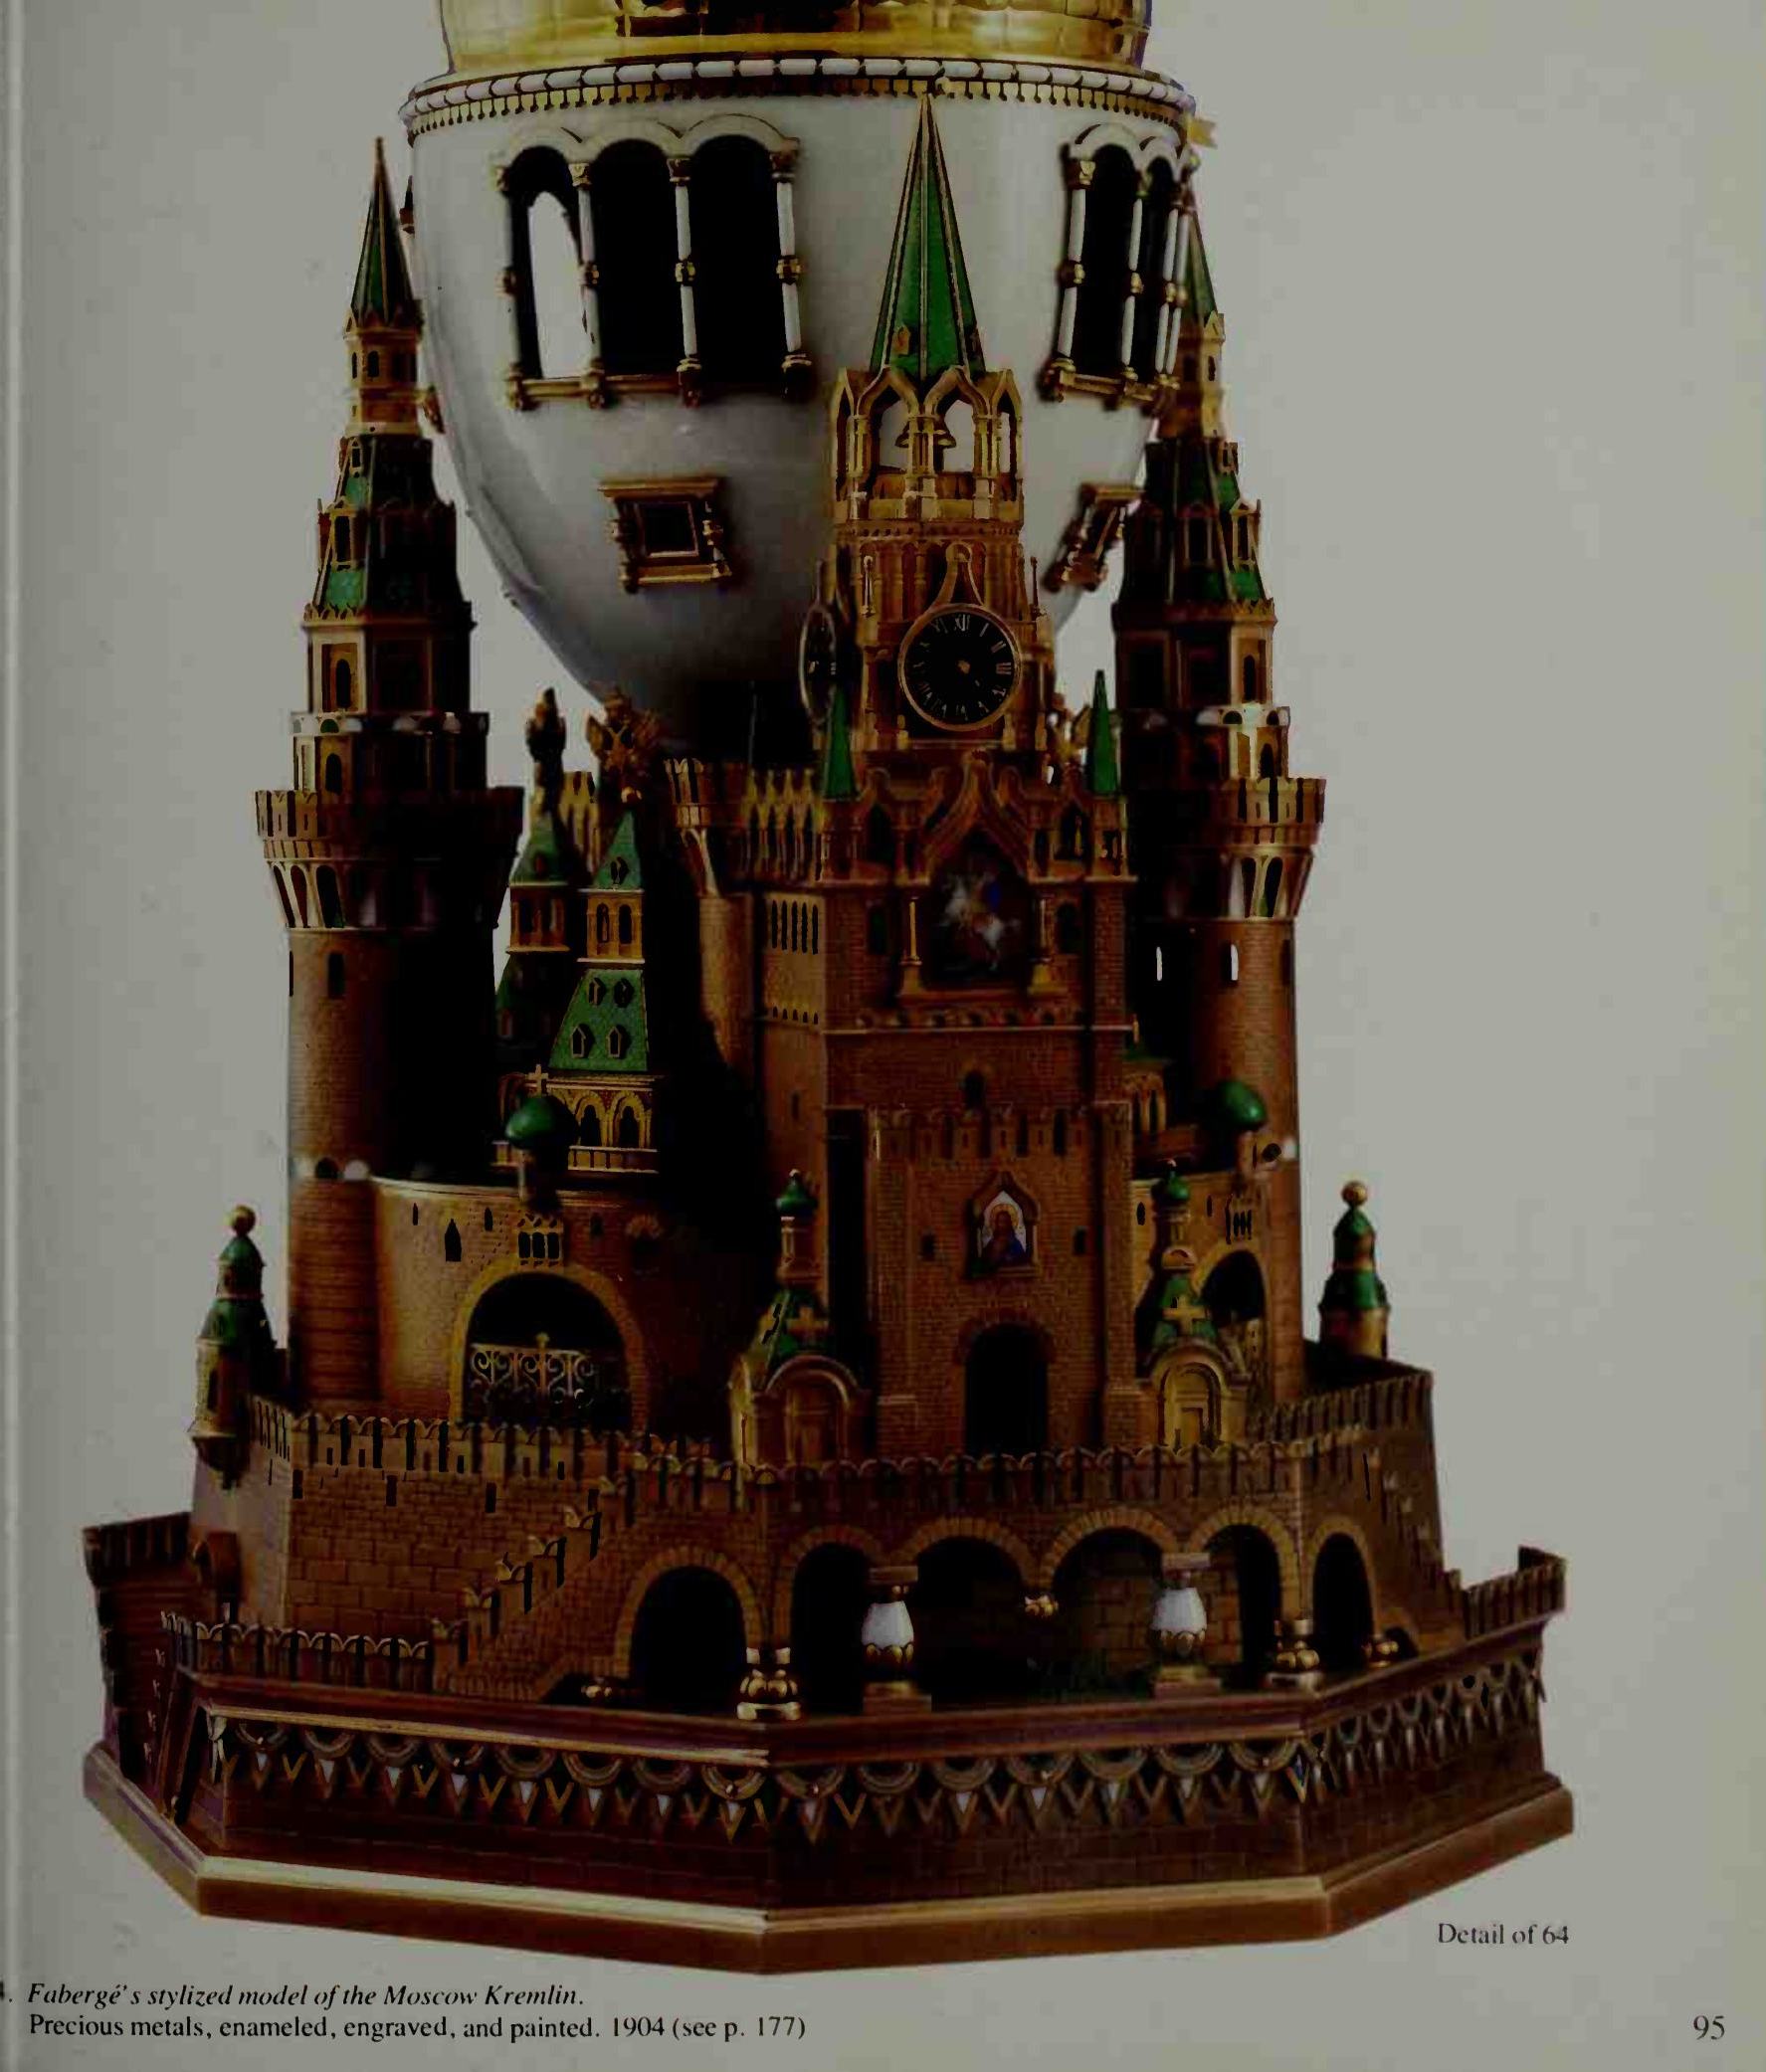 Treasures from the Kremlin. — New York : Metropolitan Museum of Art, 1979